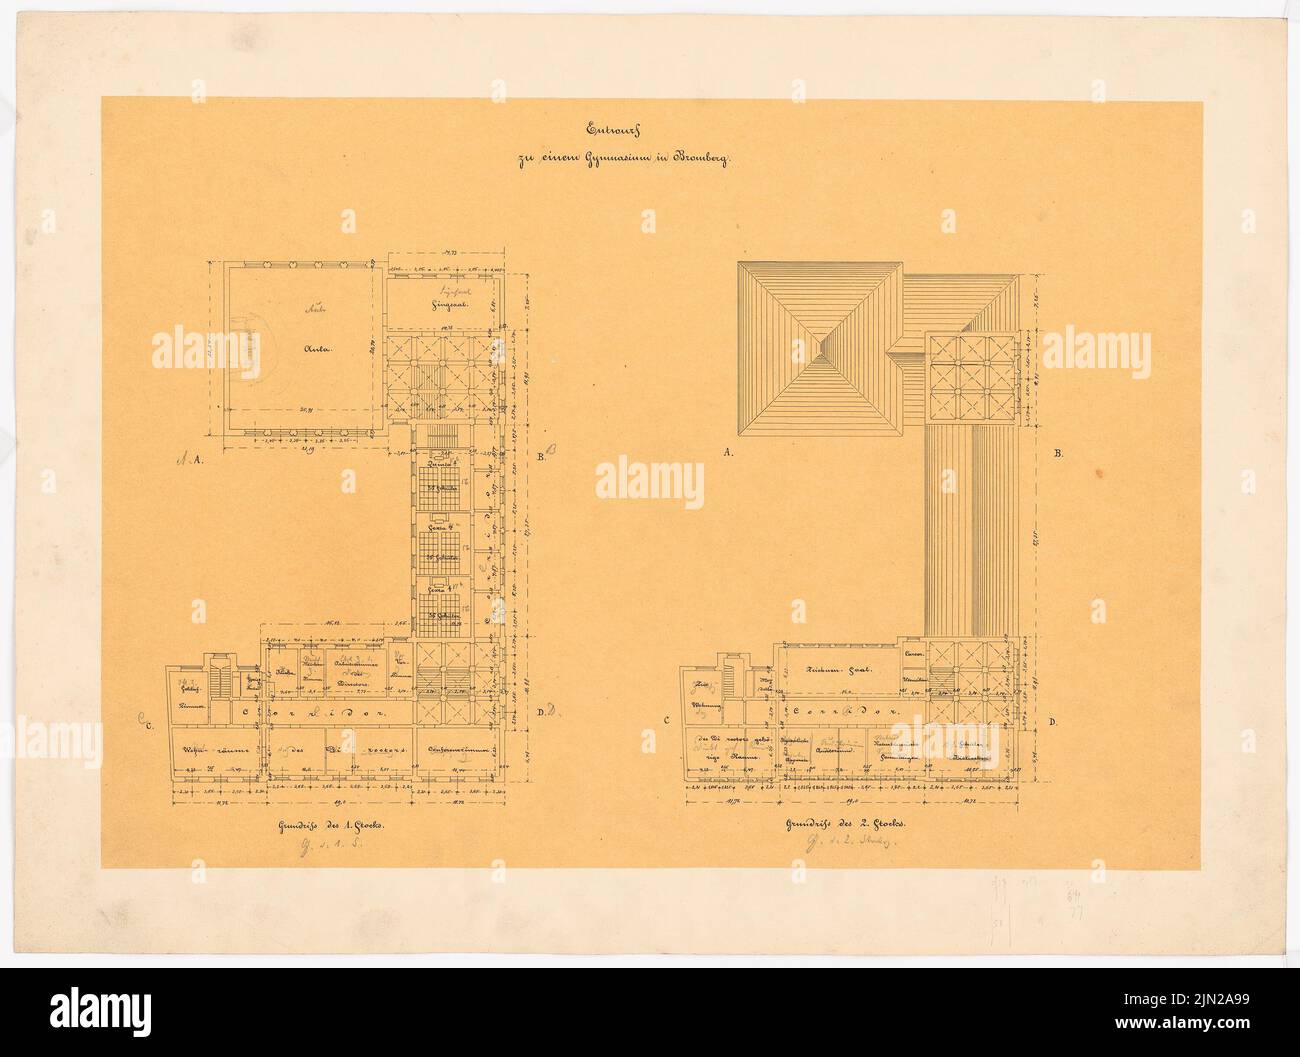 Knoblauch Gustav (1833-1916), Gymnasium, Bromberg: floor plan 1st floor, 2nd floor. Ink on transparent on paper, 51.5 x 69.2 cm (including scan edges) Stock Photo